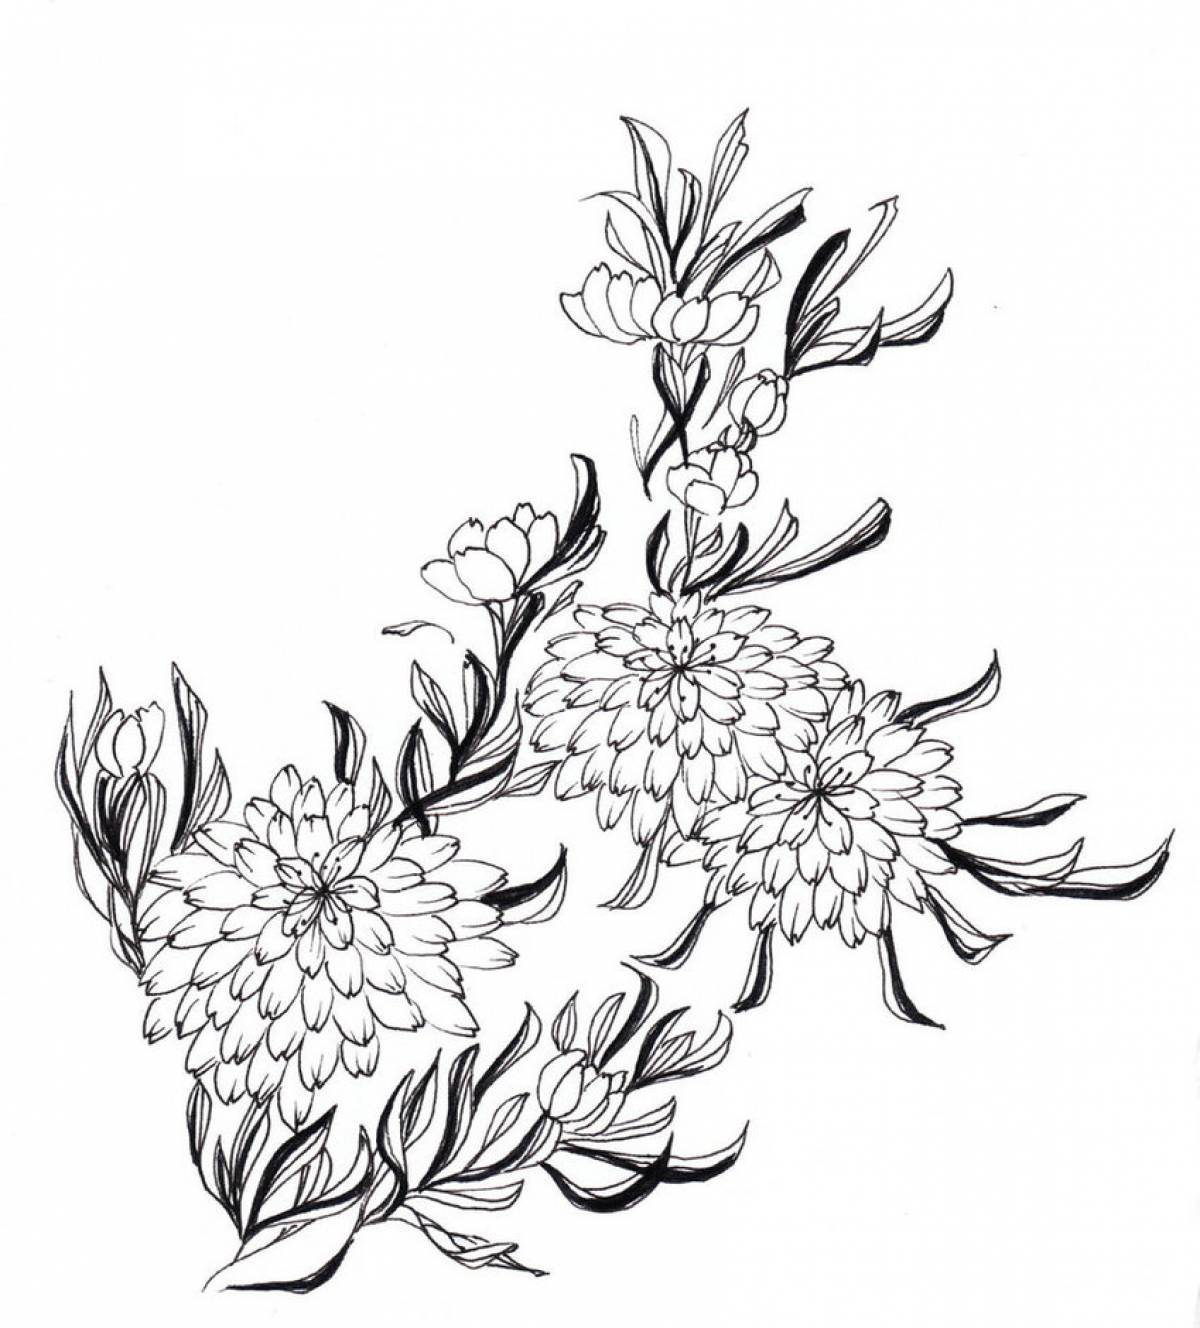 Chrysanthemum composition